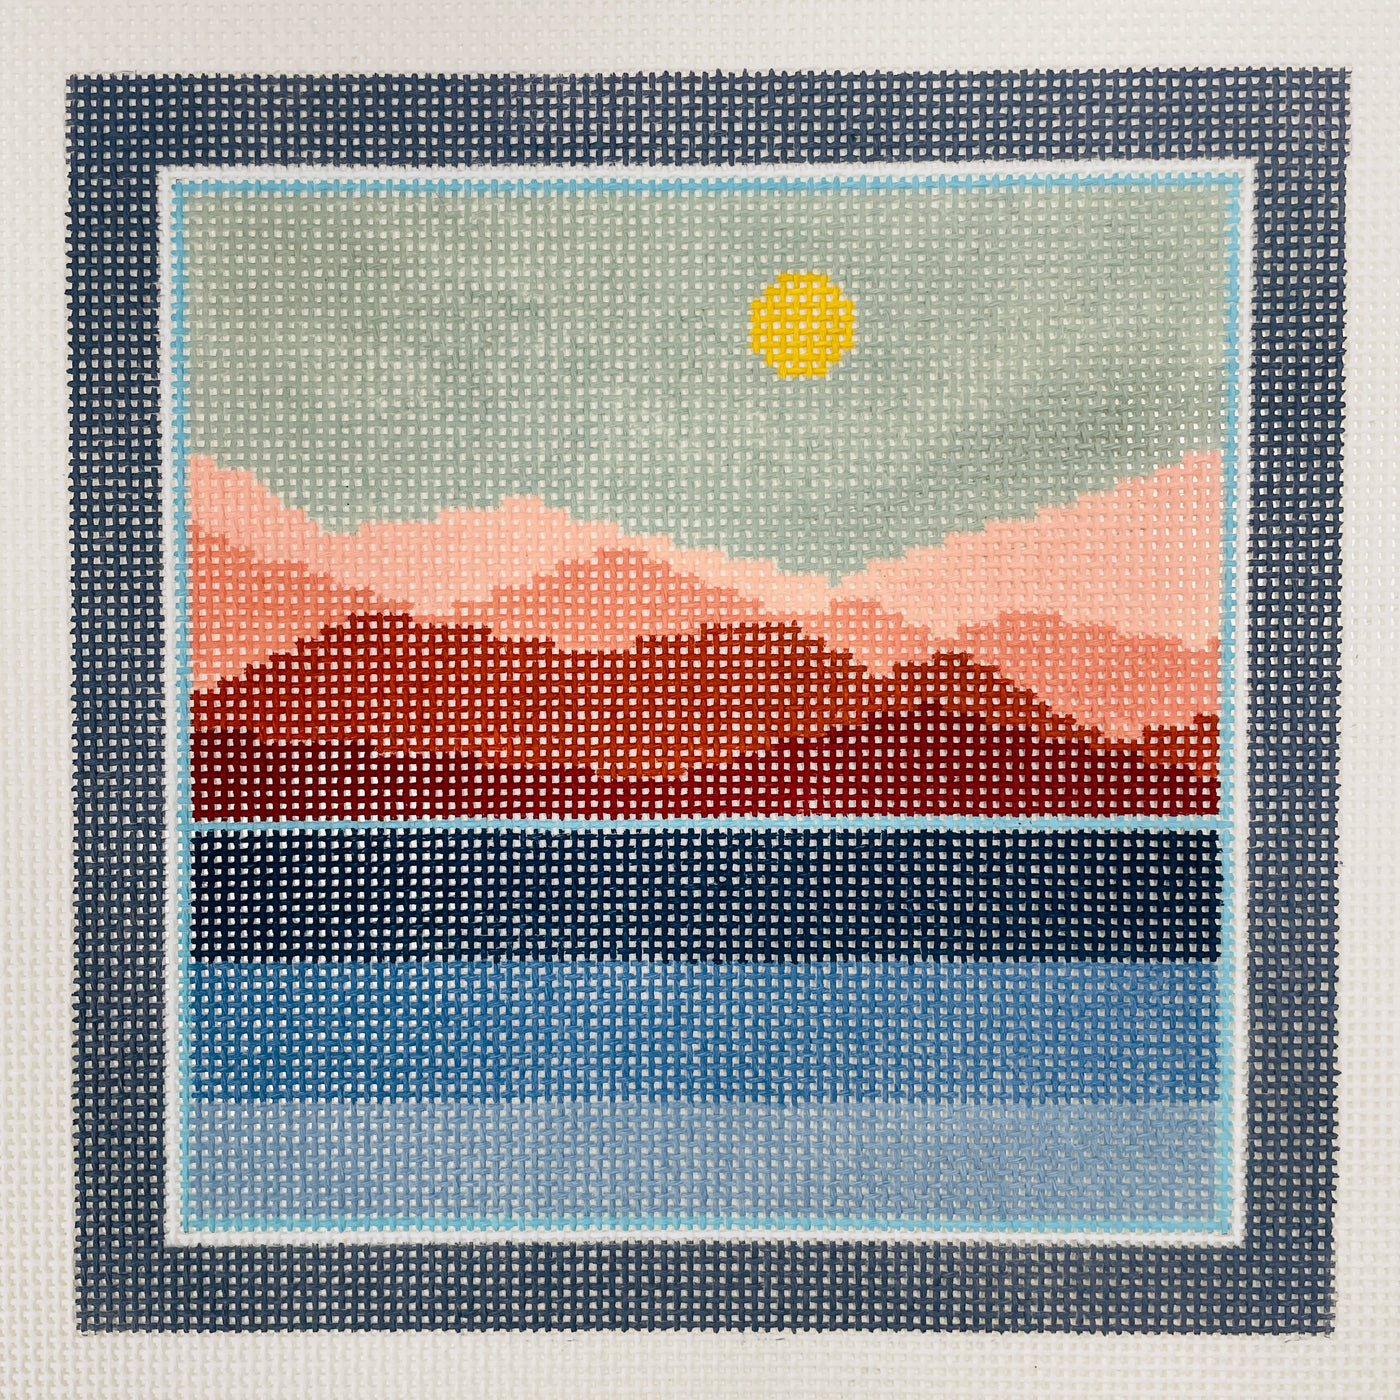 Terra Cotta and Blue Landscape Needlepoint Canvas